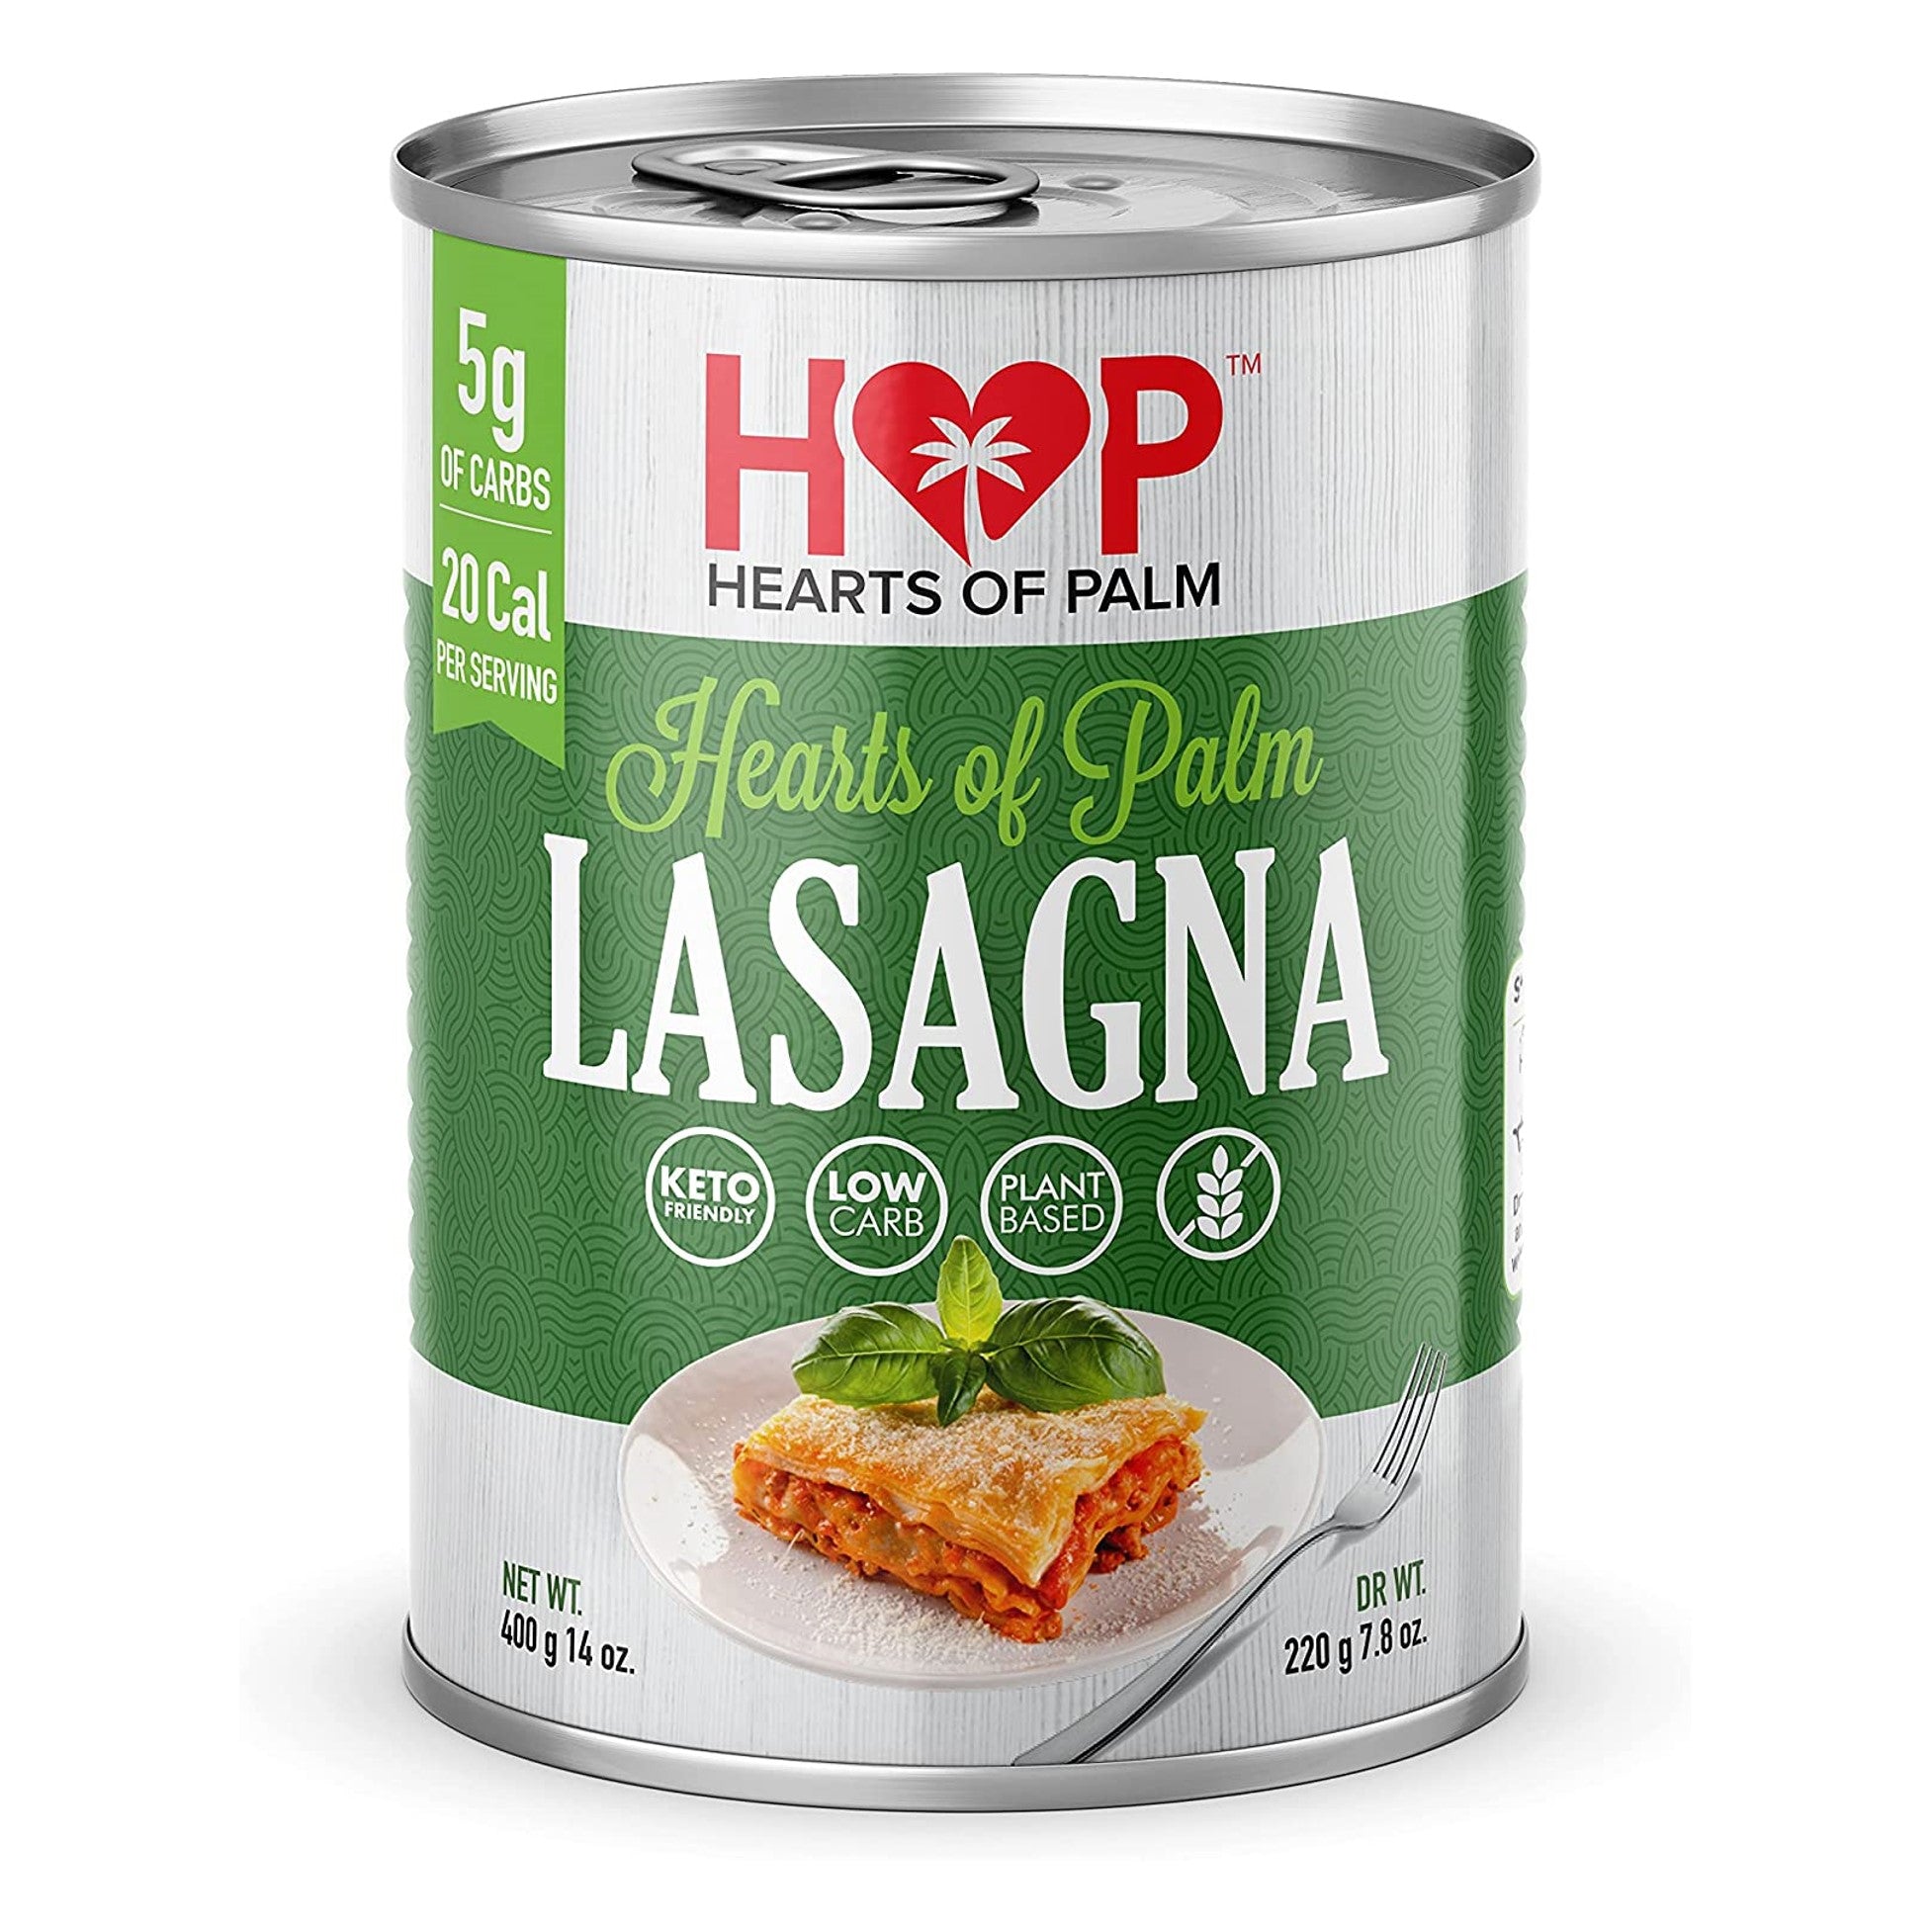 HOP Heart of Palm Pasta